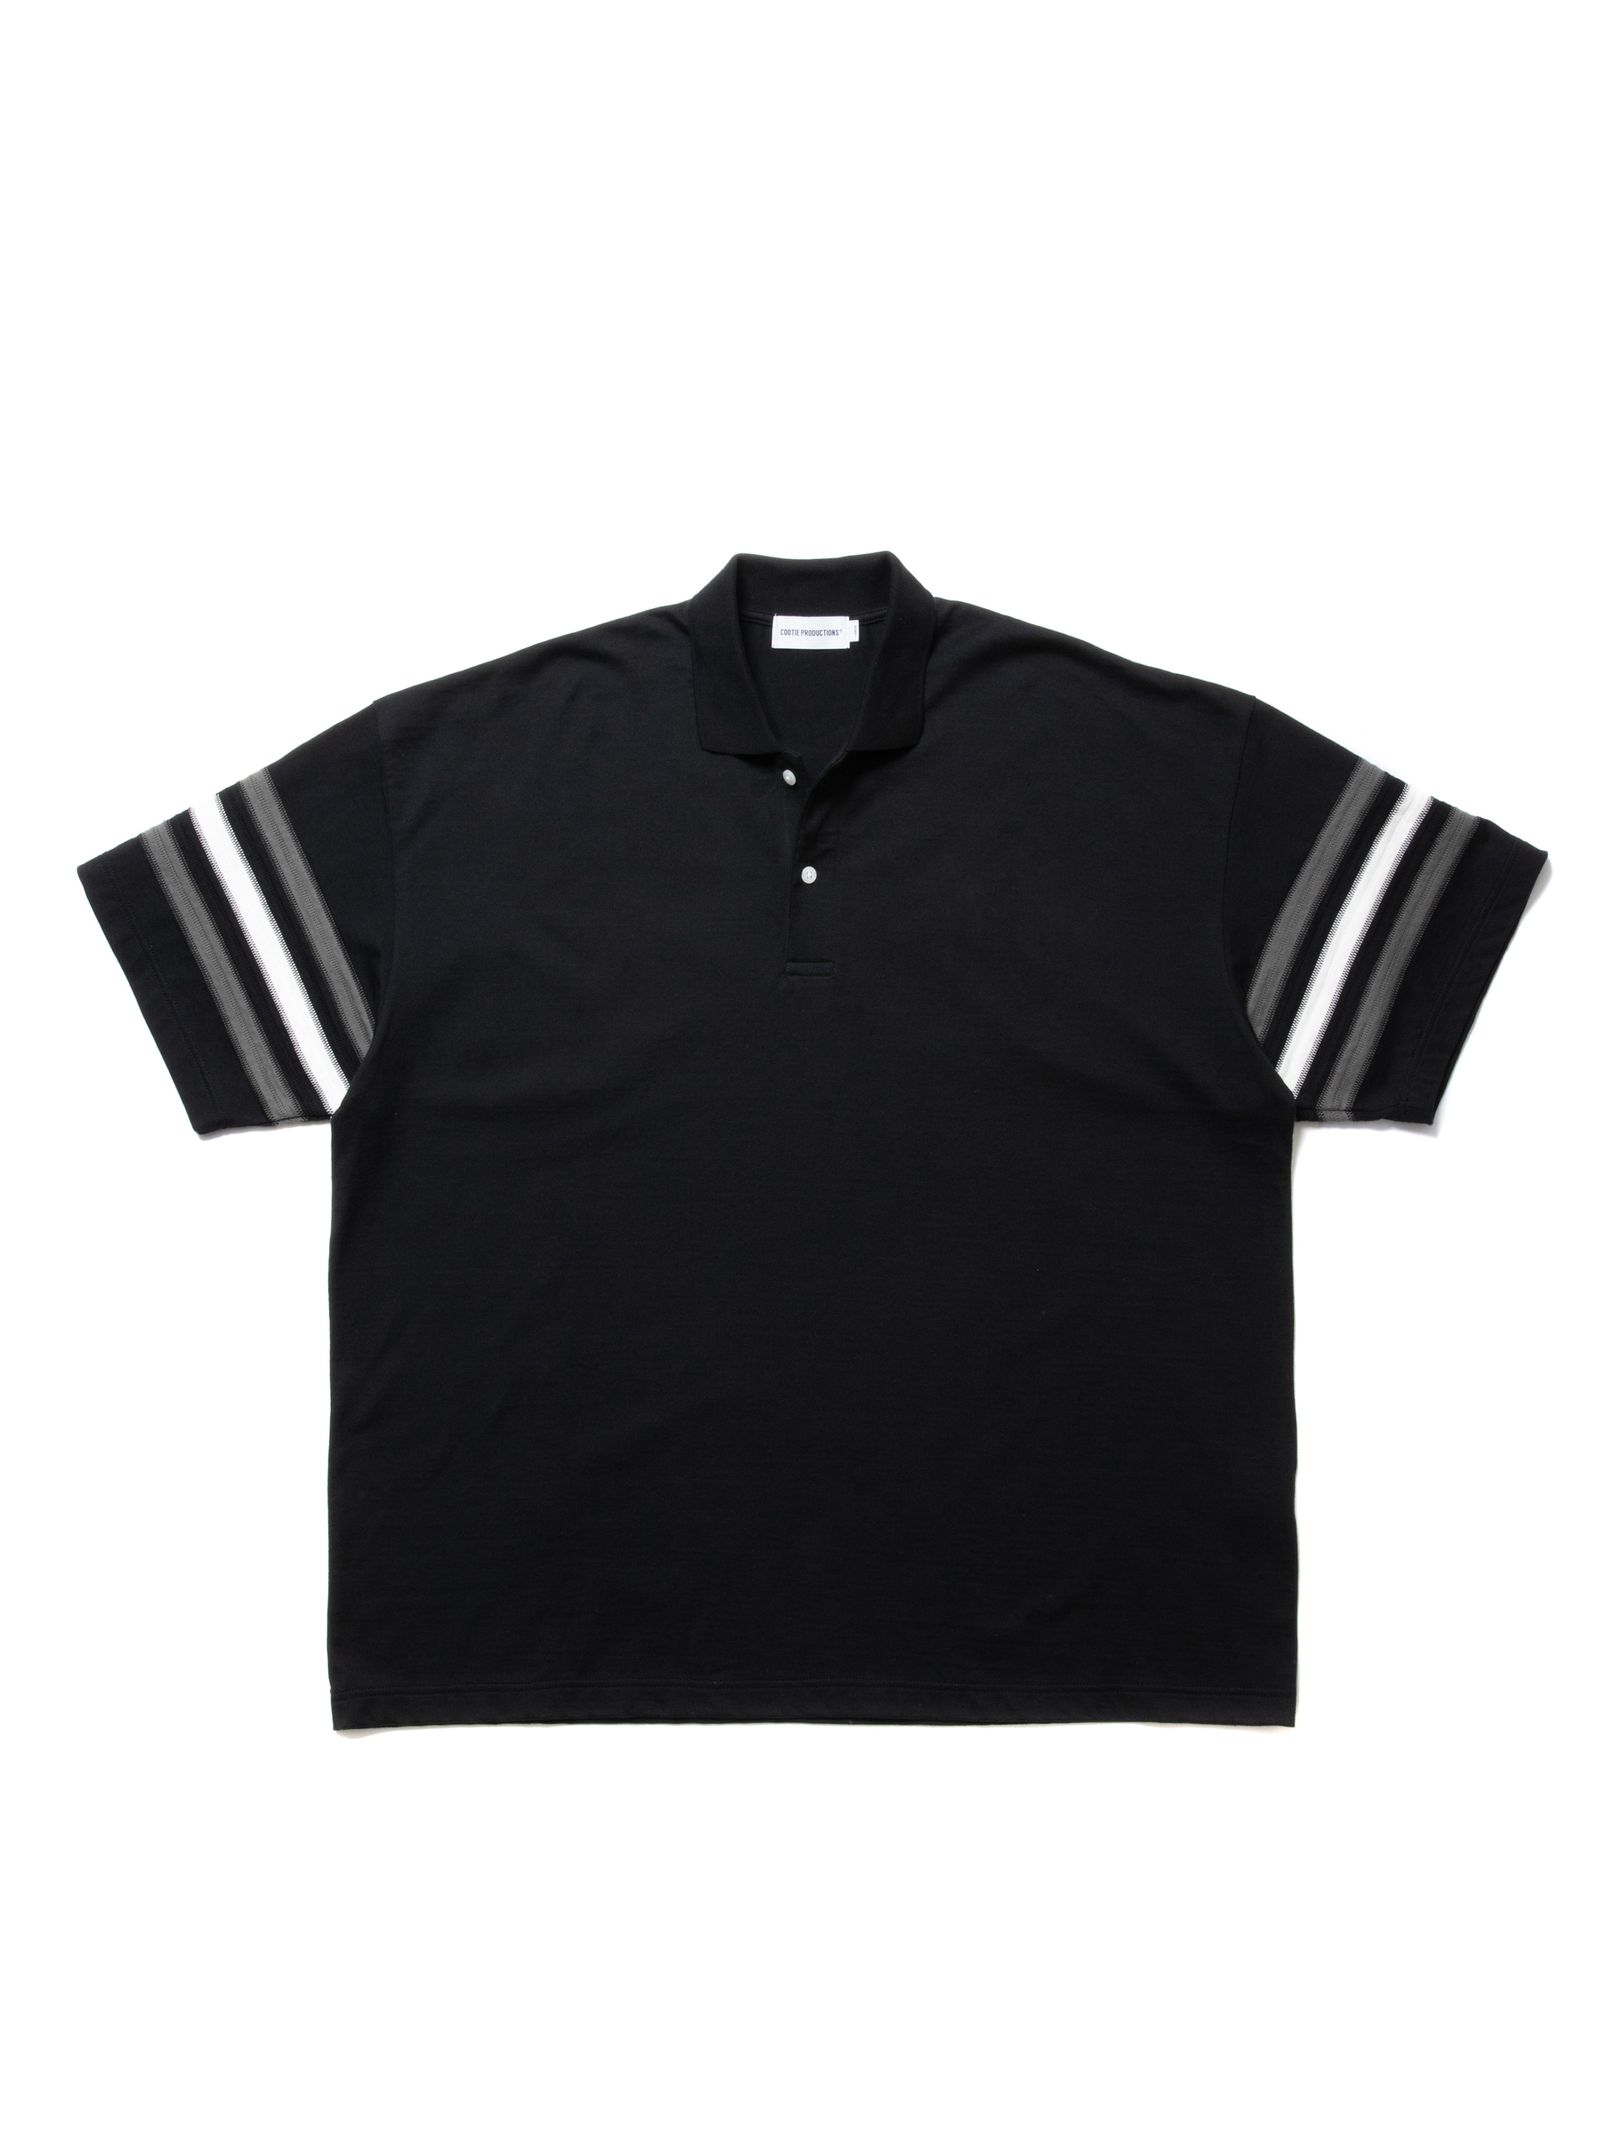 Jacquard Sleeve S/S Polo / Black / ジャガードポロシャツ - S